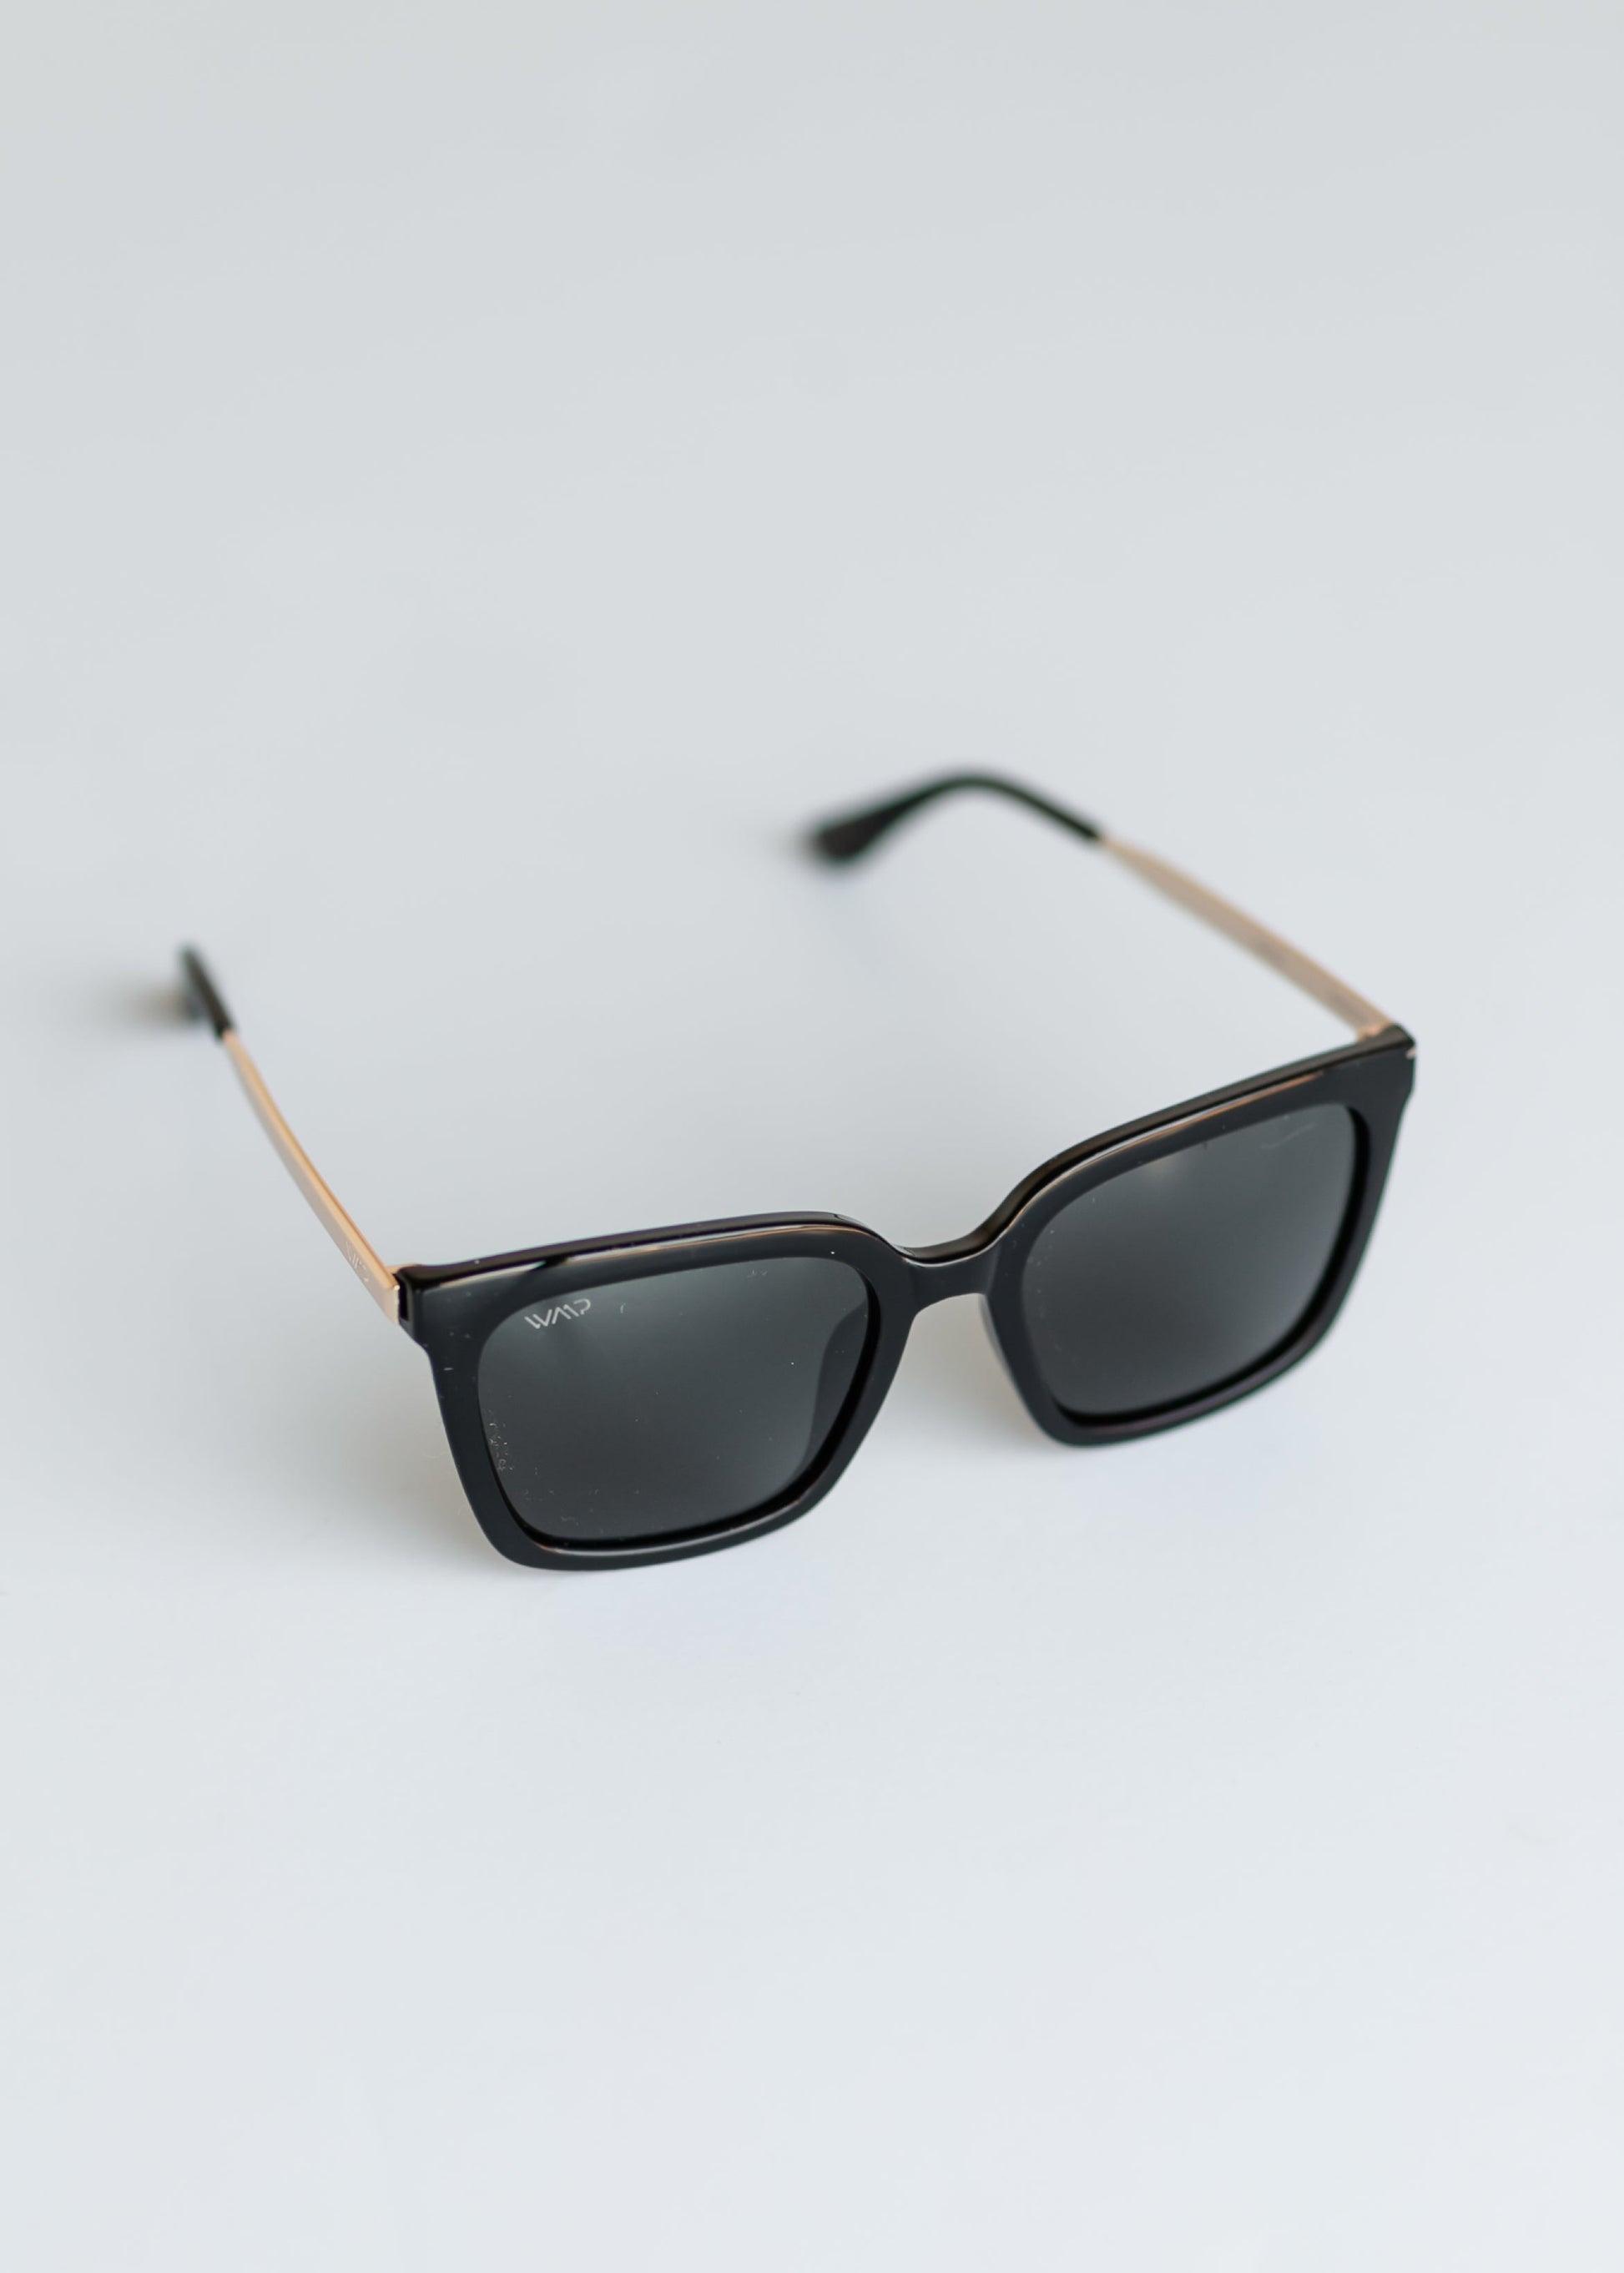 Black and Gold Square Sunglasses Accessories